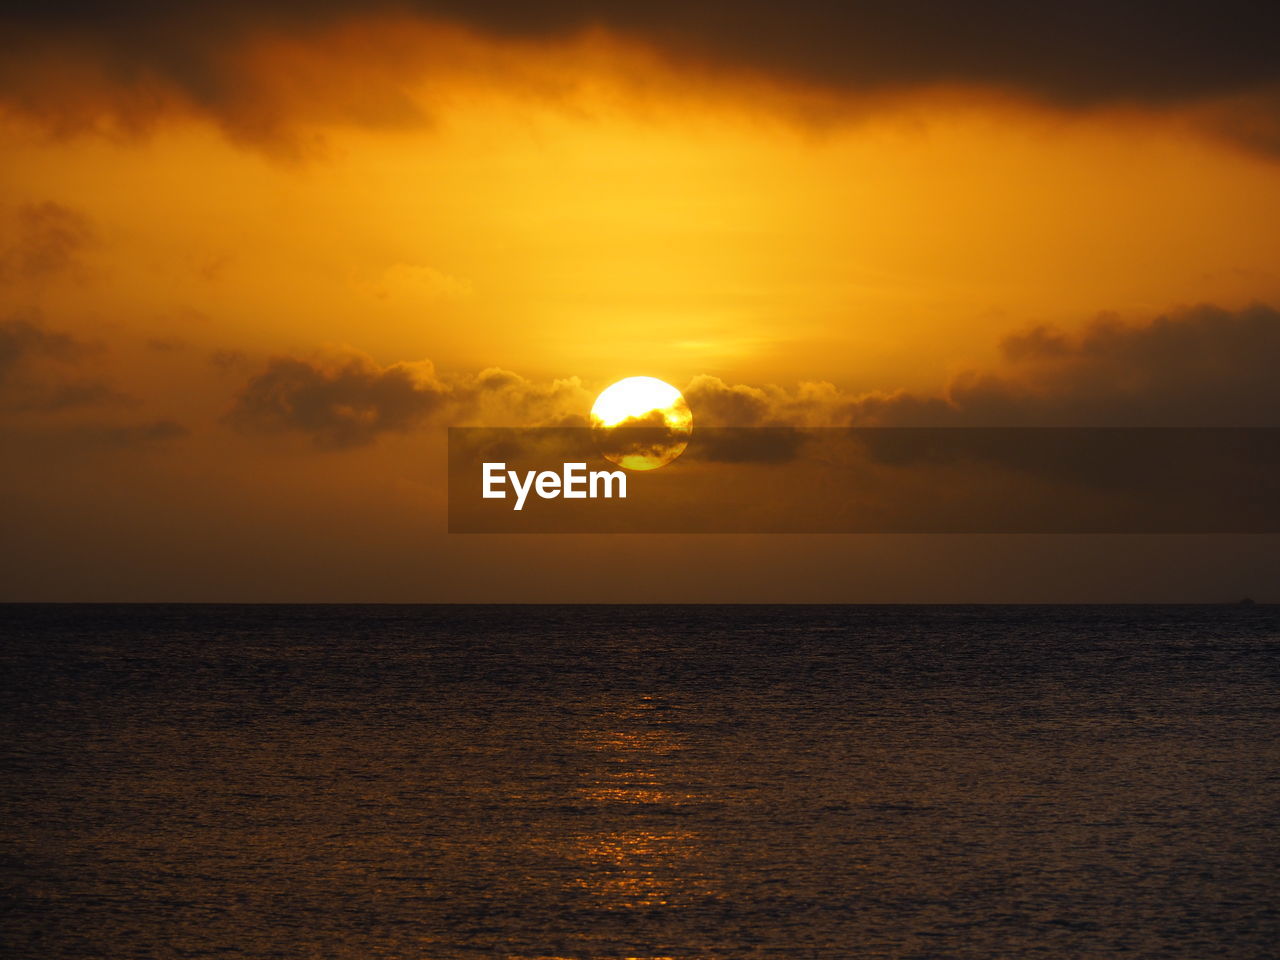 Sunset in seychelles 